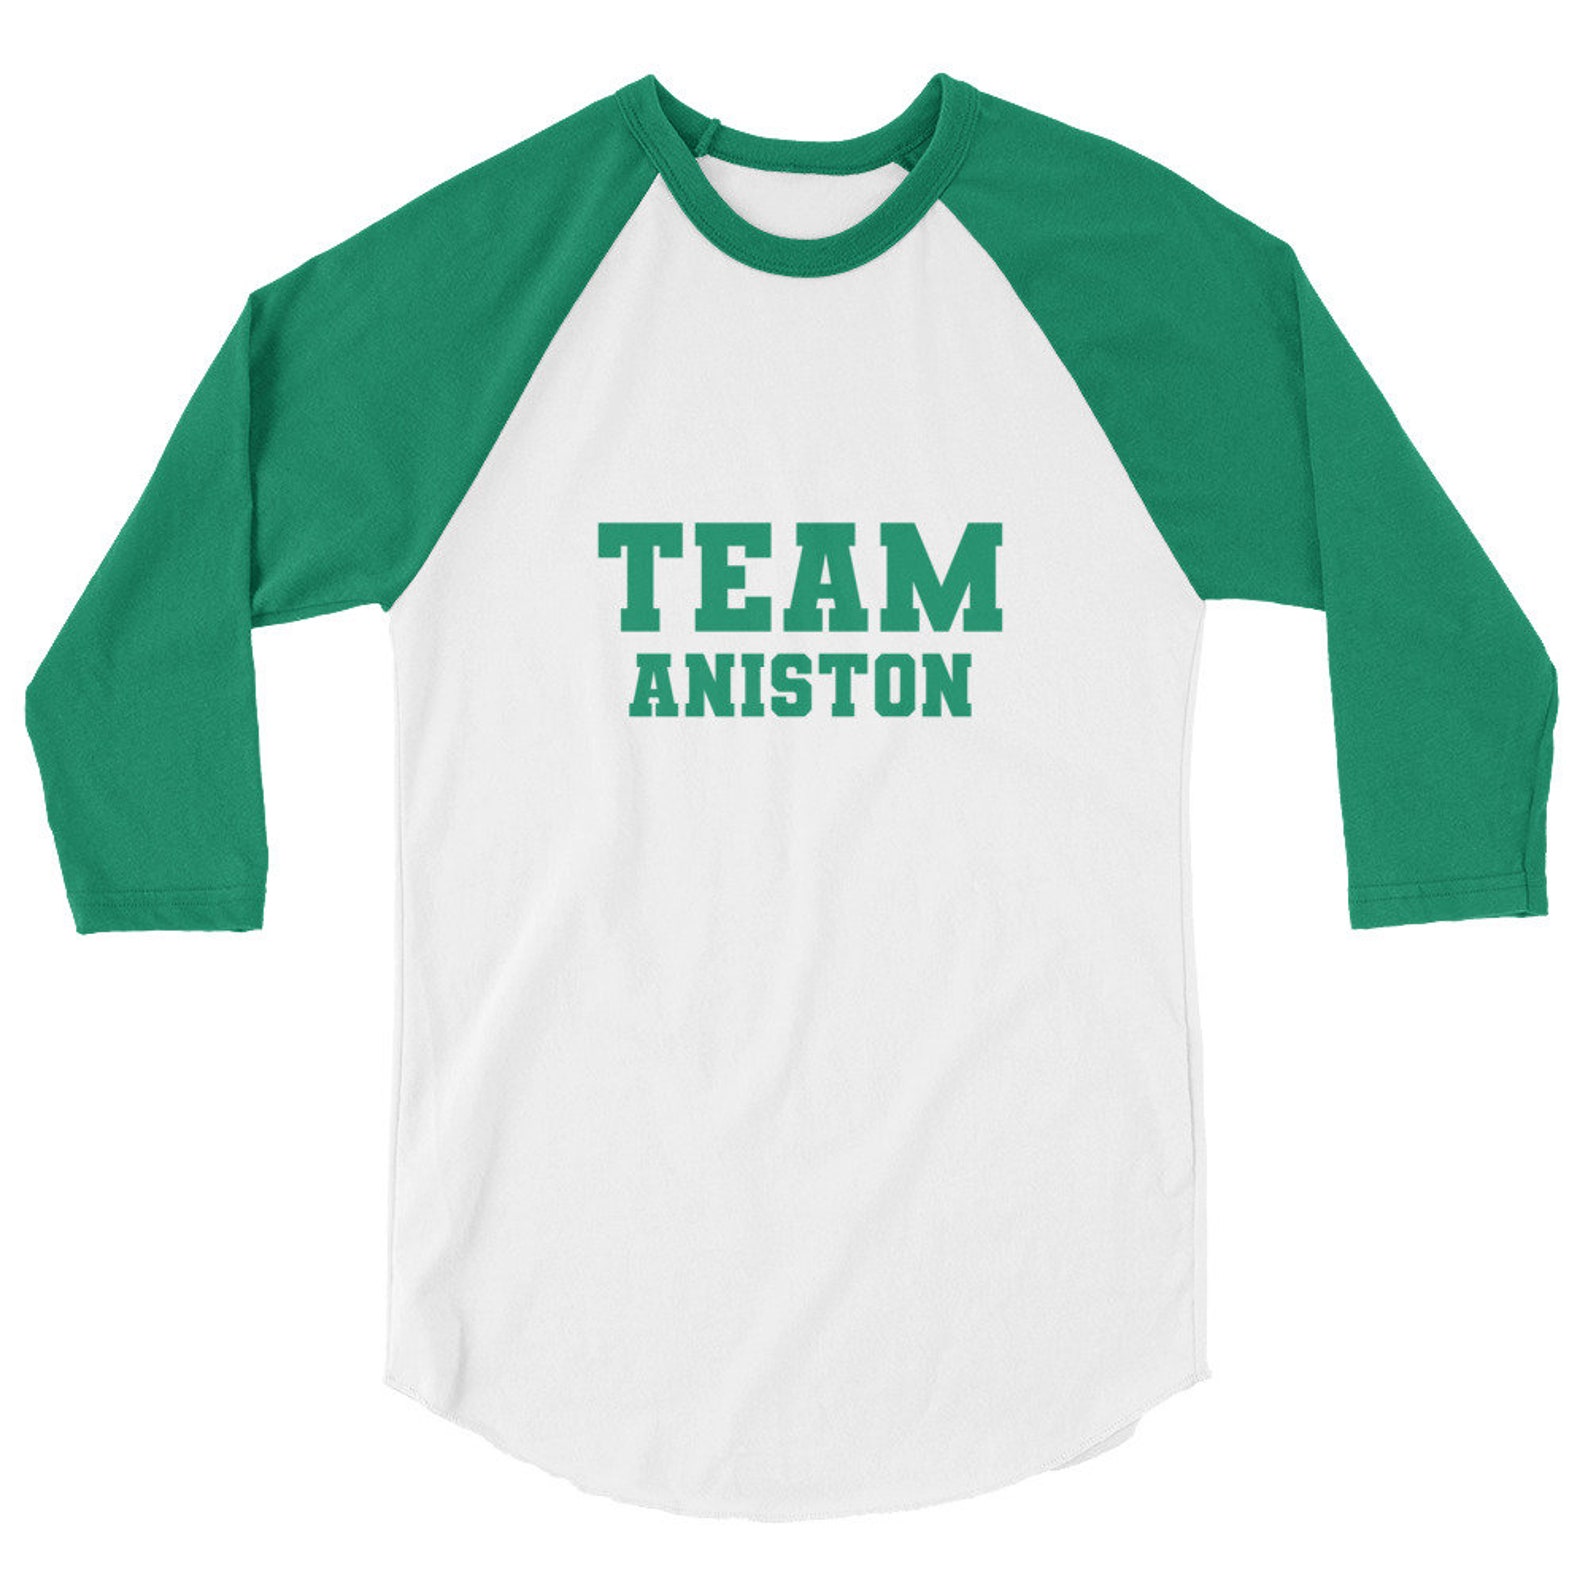 Team Aniston Green and White Raglan Baseball Tee | Etsy